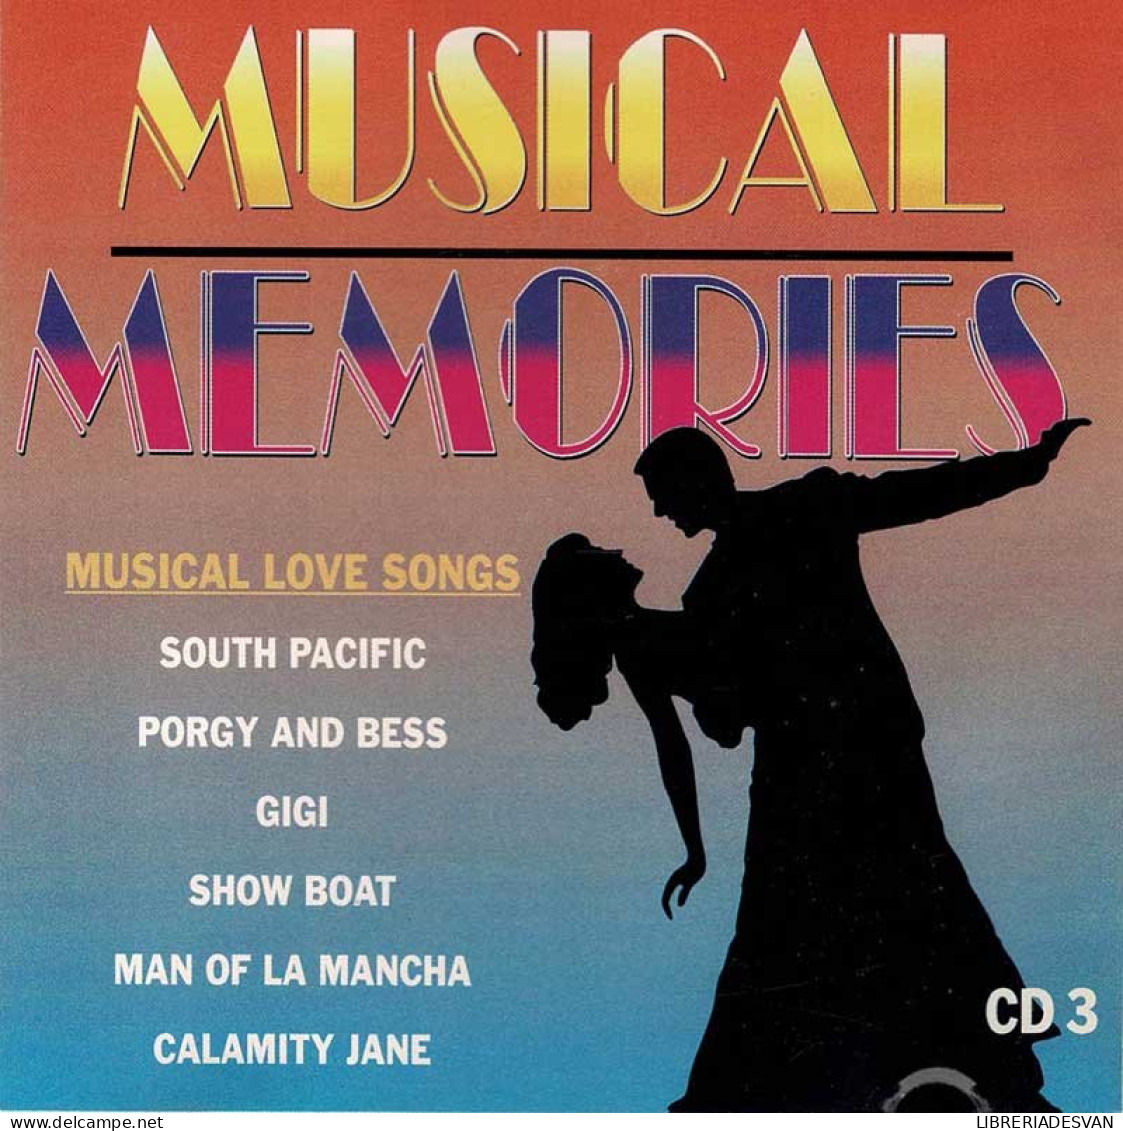 Musical Memories. CD 3 - Soundtracks, Film Music